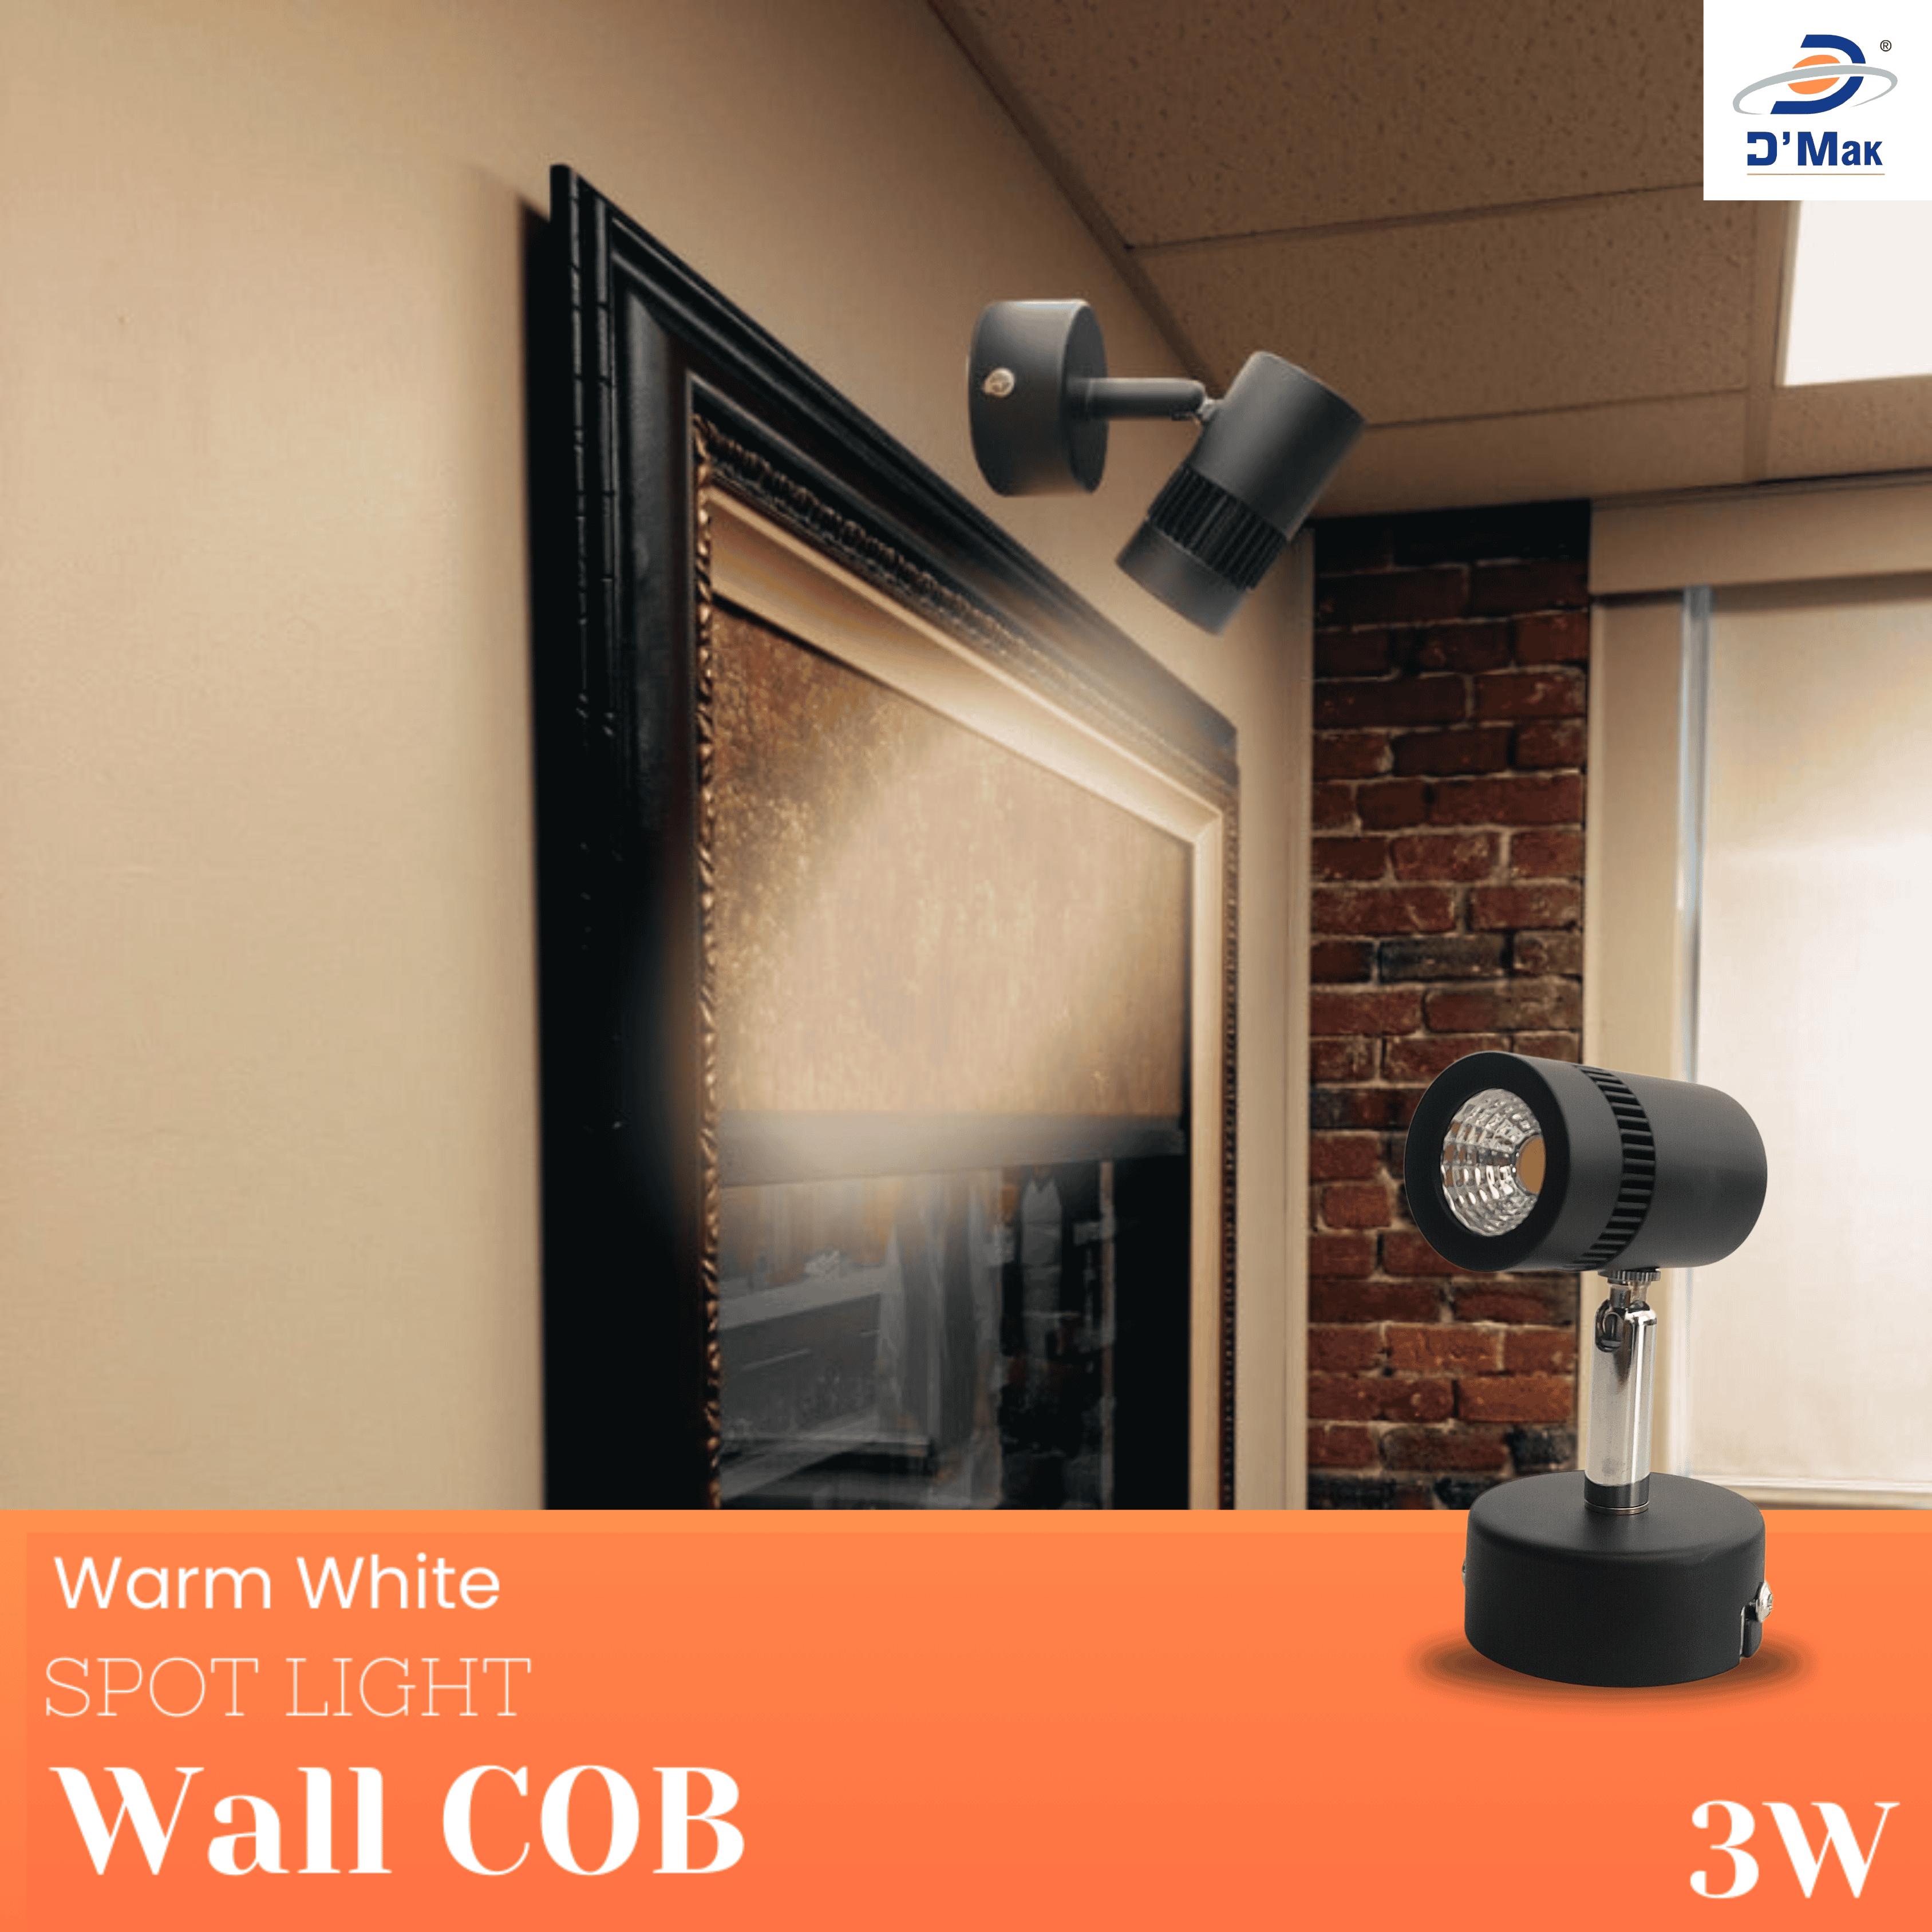 3 Watt Led Black Body Wall Light for focusing wall or photo frame